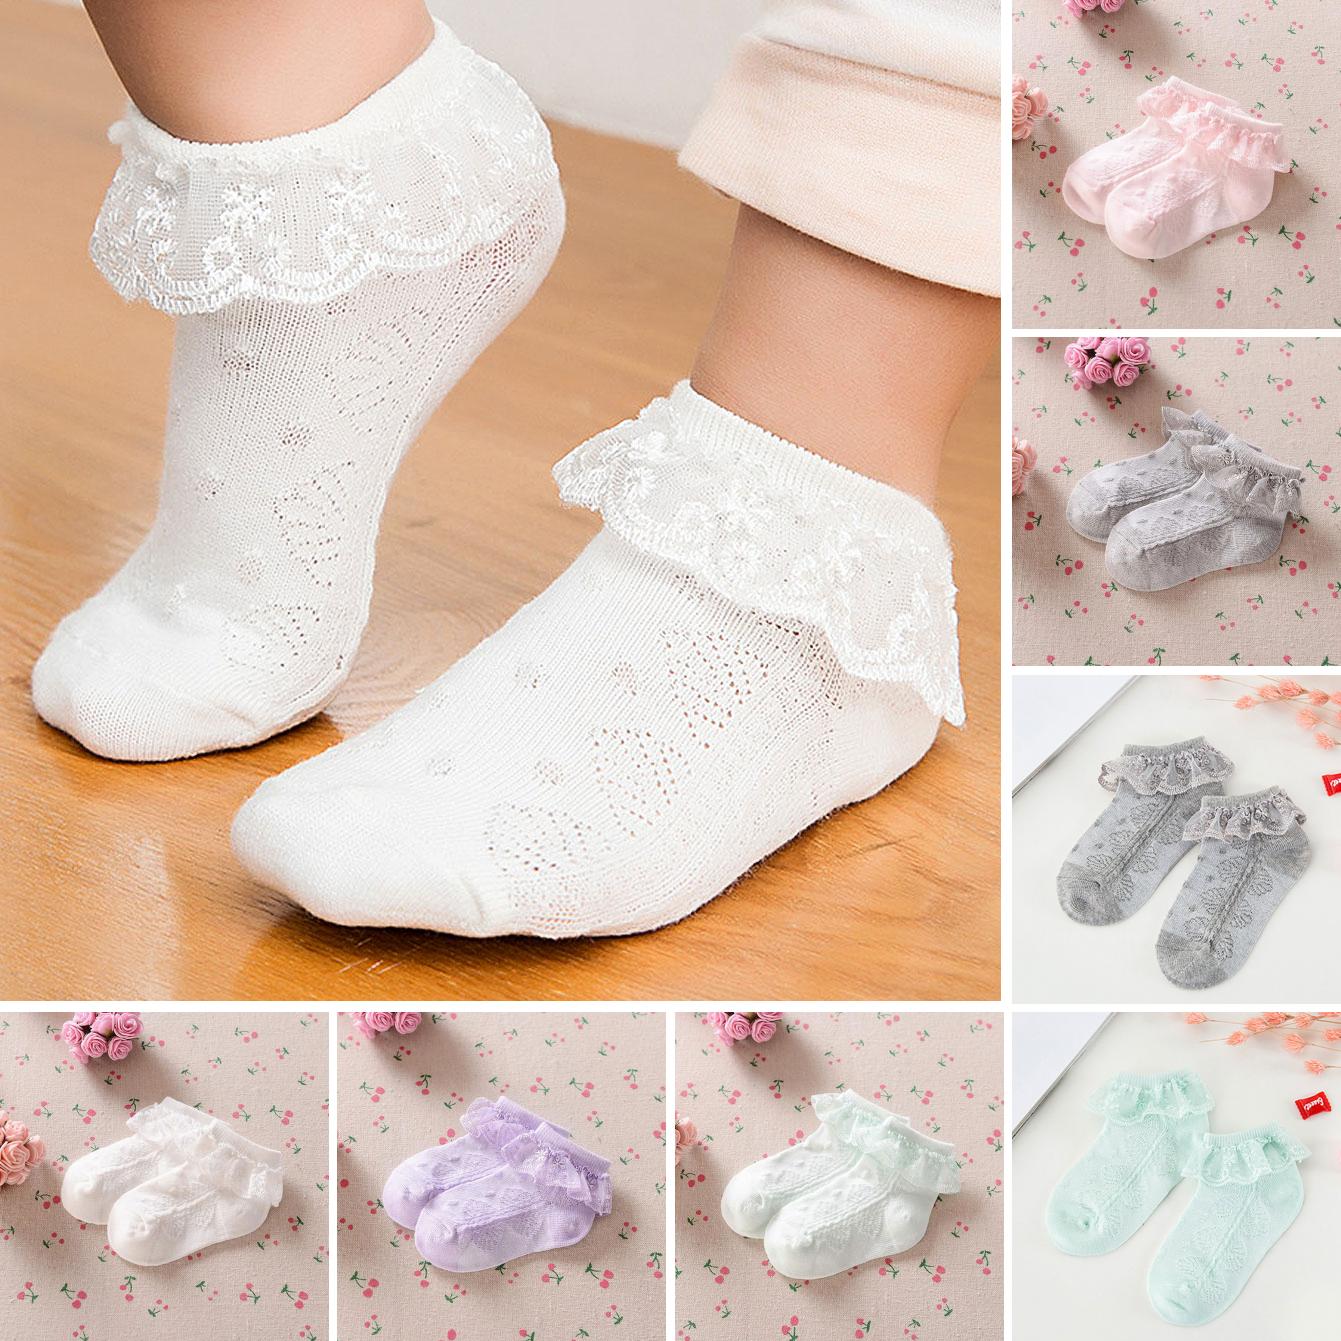 Lamdgbway 5 Pairs Cute Girls Socks Mesh Cotton Toddler Kids Socks Crew Socks 